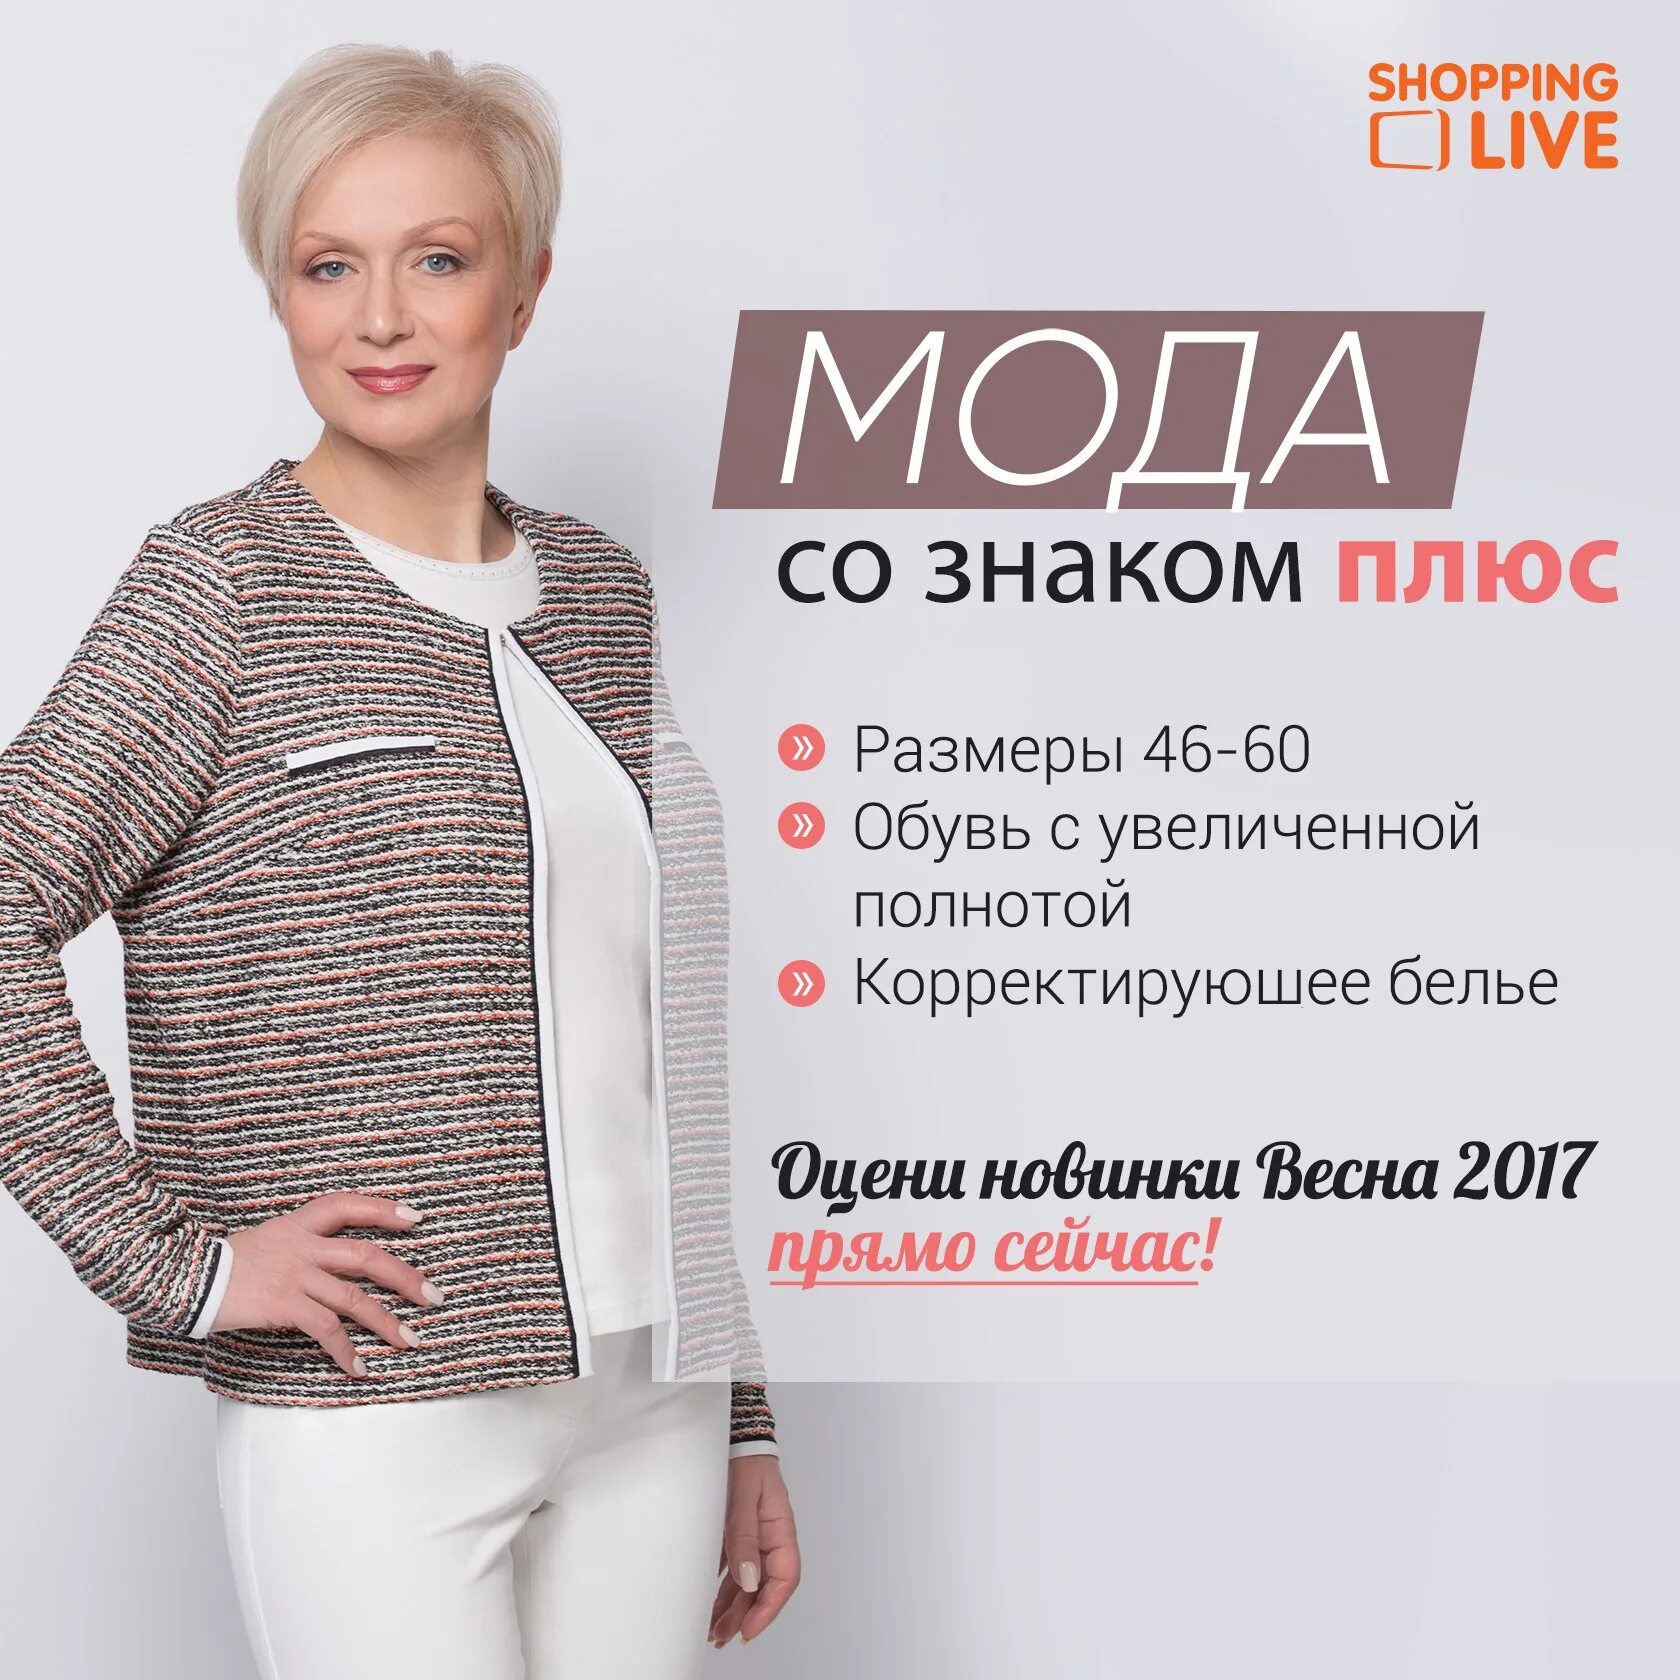 Shopping Live интернет-магазин. Shopping Live интернет магазин каталог. SHOPPINGLIVE.ru интернет магазин. Каталог одежды. Шопенлайф